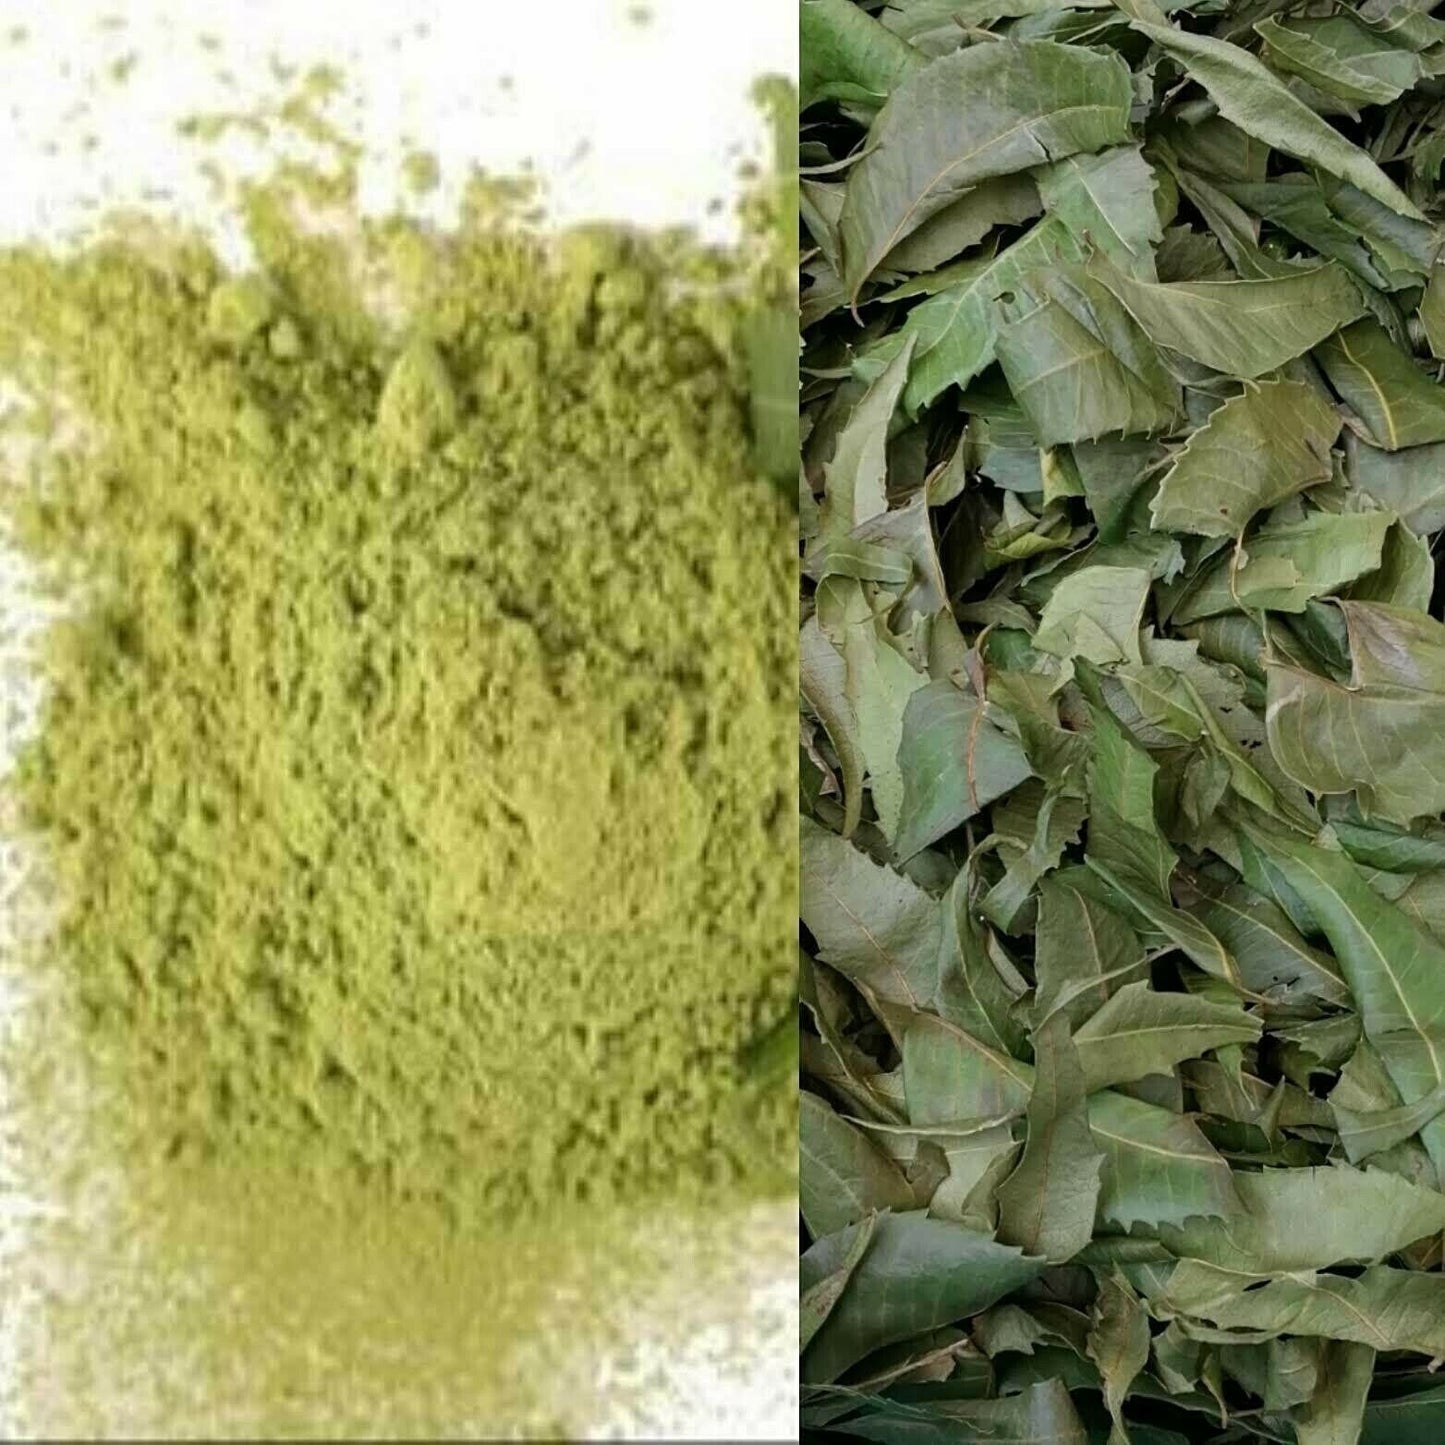 Ari Dry Neem leaf Extract Powder Natural Dried neem leaves Azadirachta indica